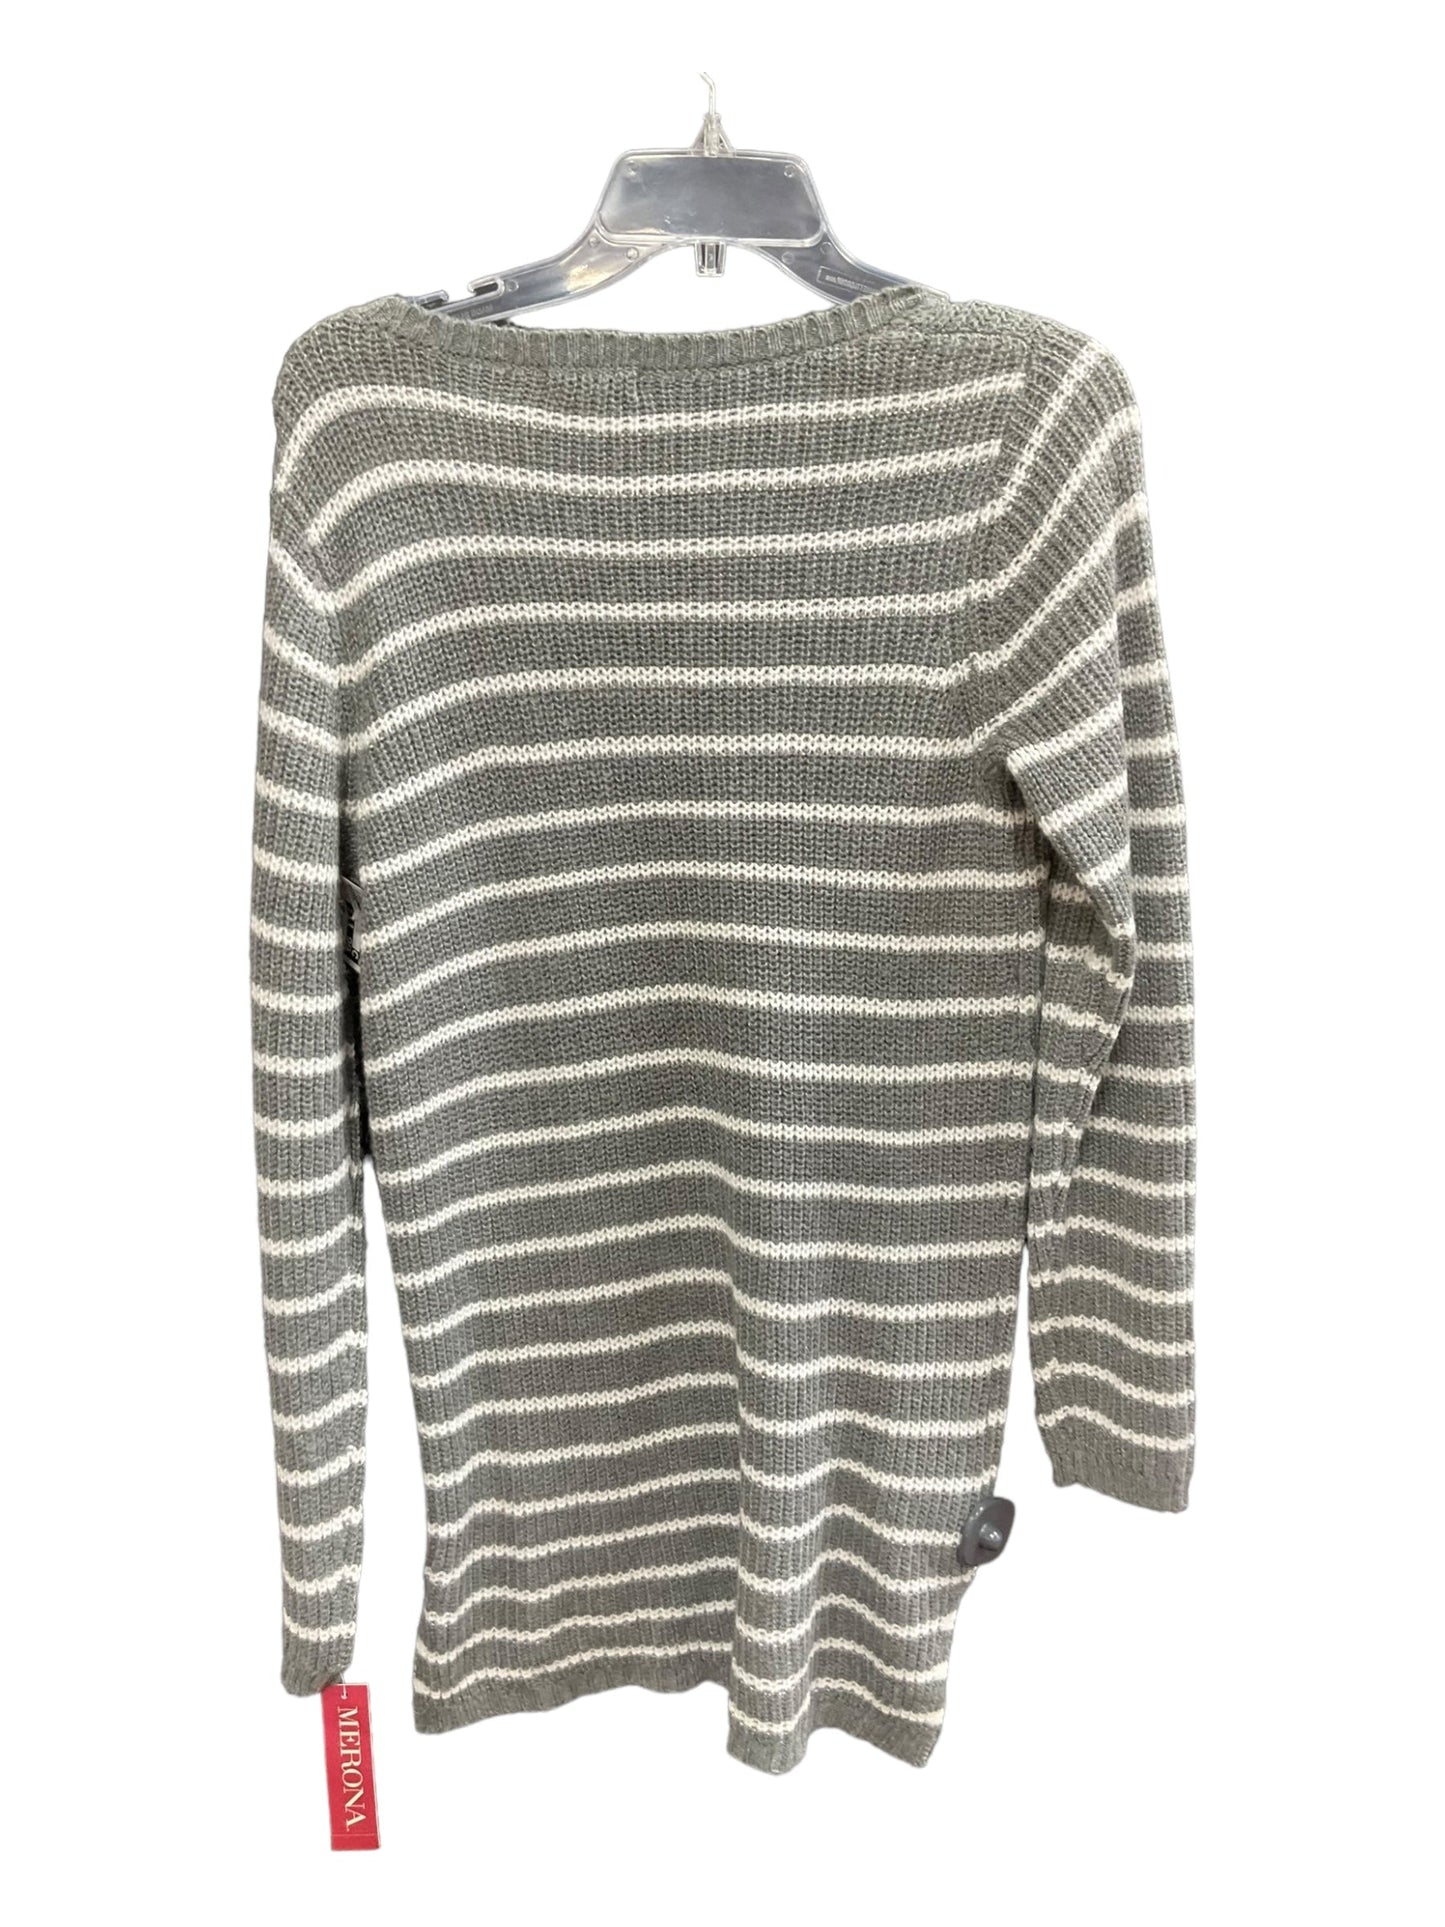 Grey & White Sweater Merona, Size M